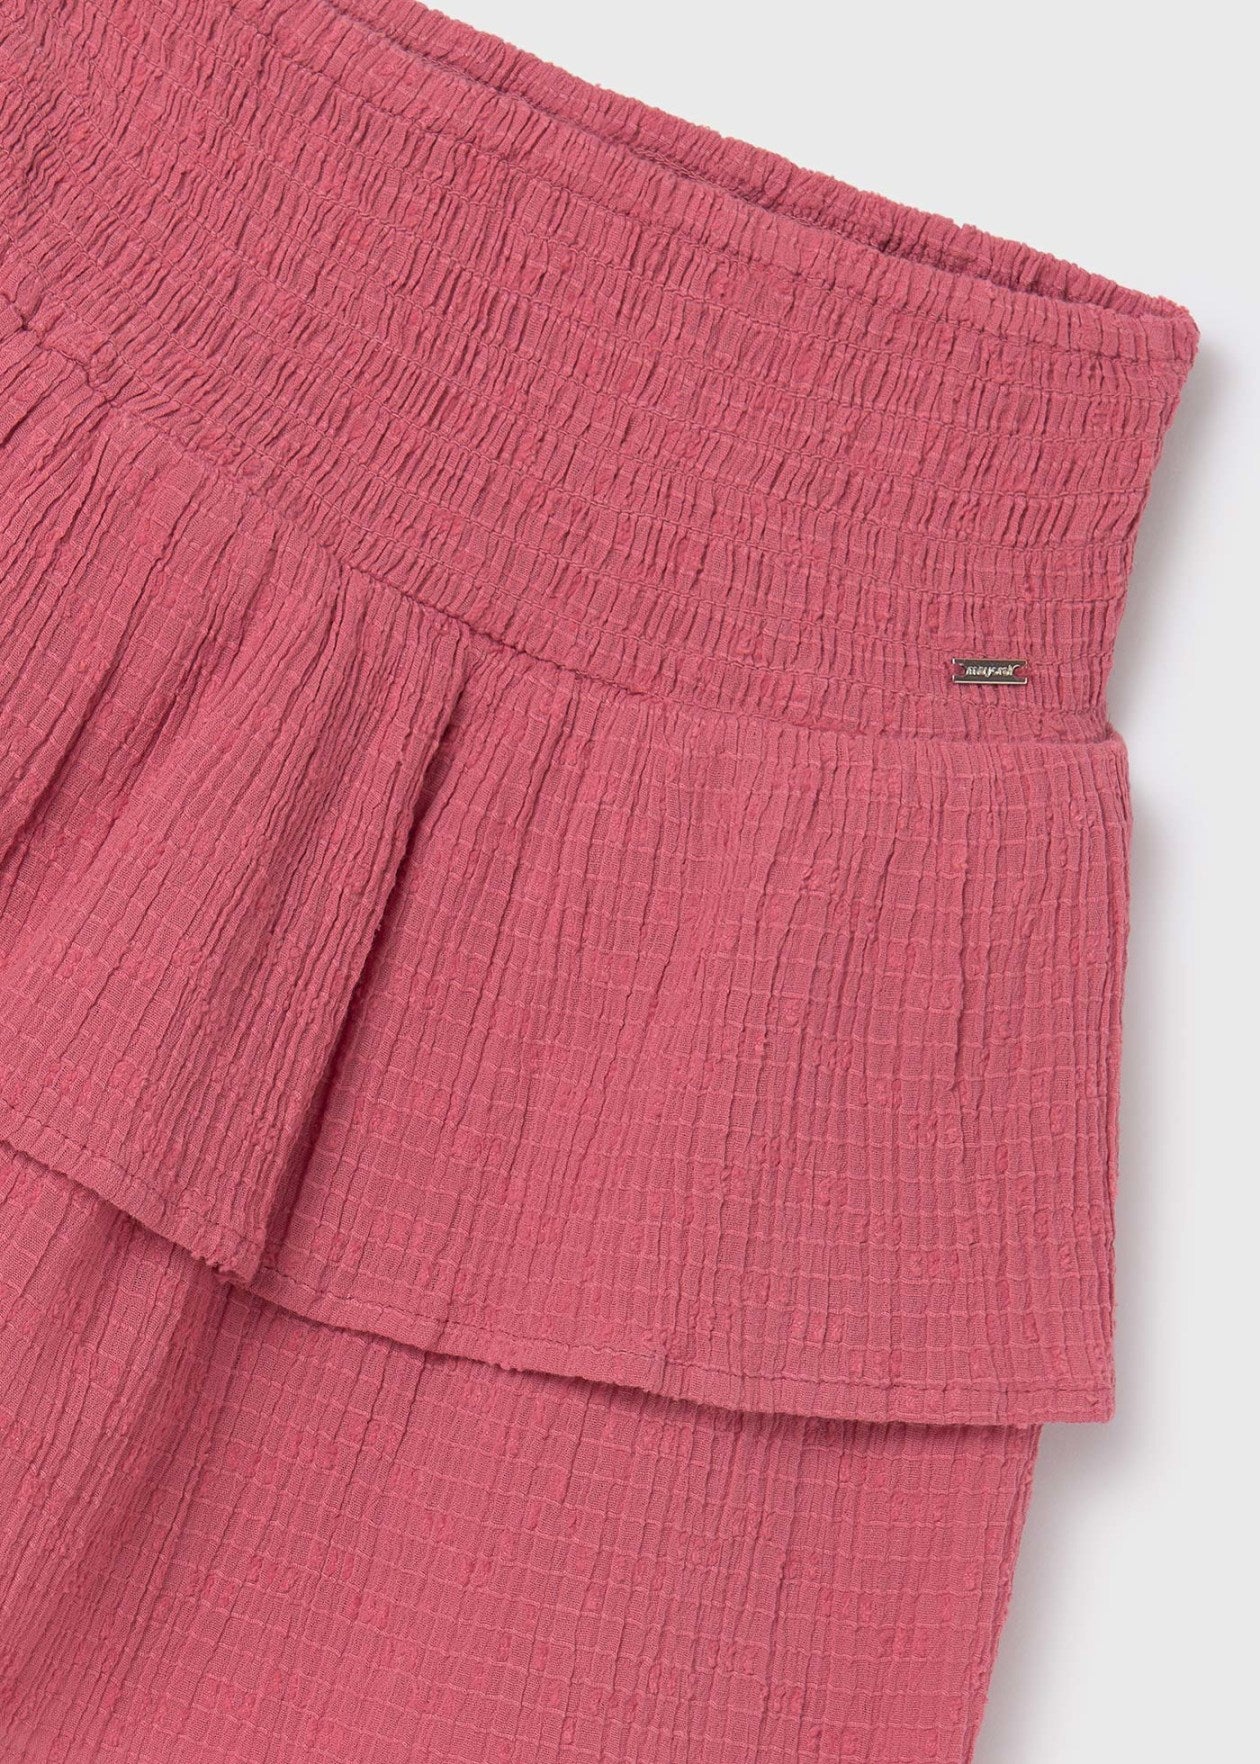 Blush Color Frill Skirt